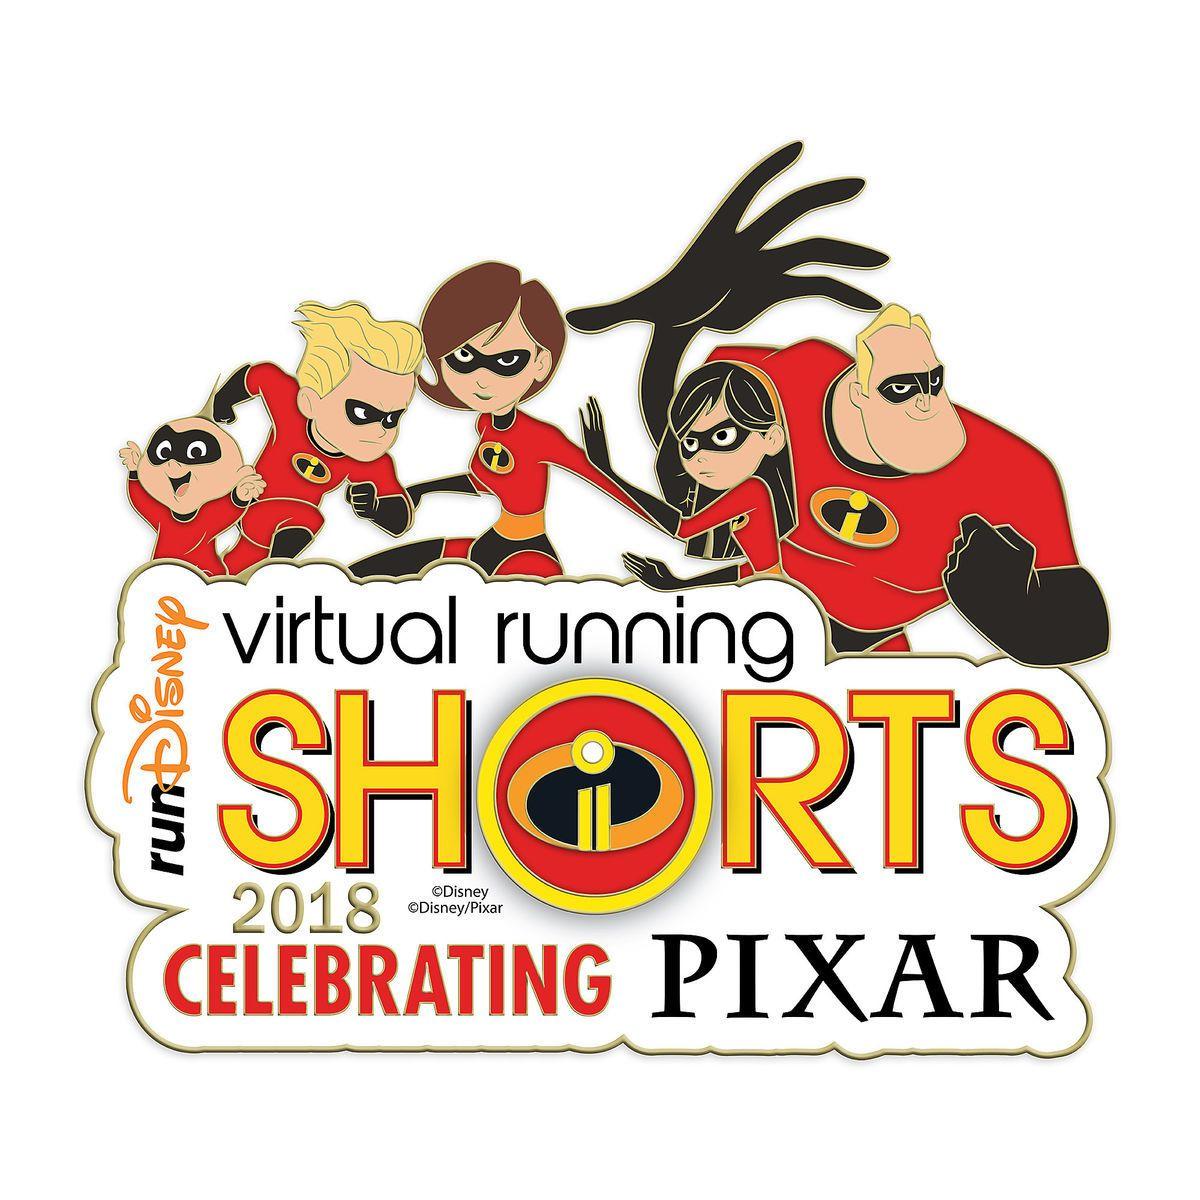 Incredible the Pixar Logo - runDisney Incredibles 2 Virtual Running Shorts 2018 Pin | shopDisney